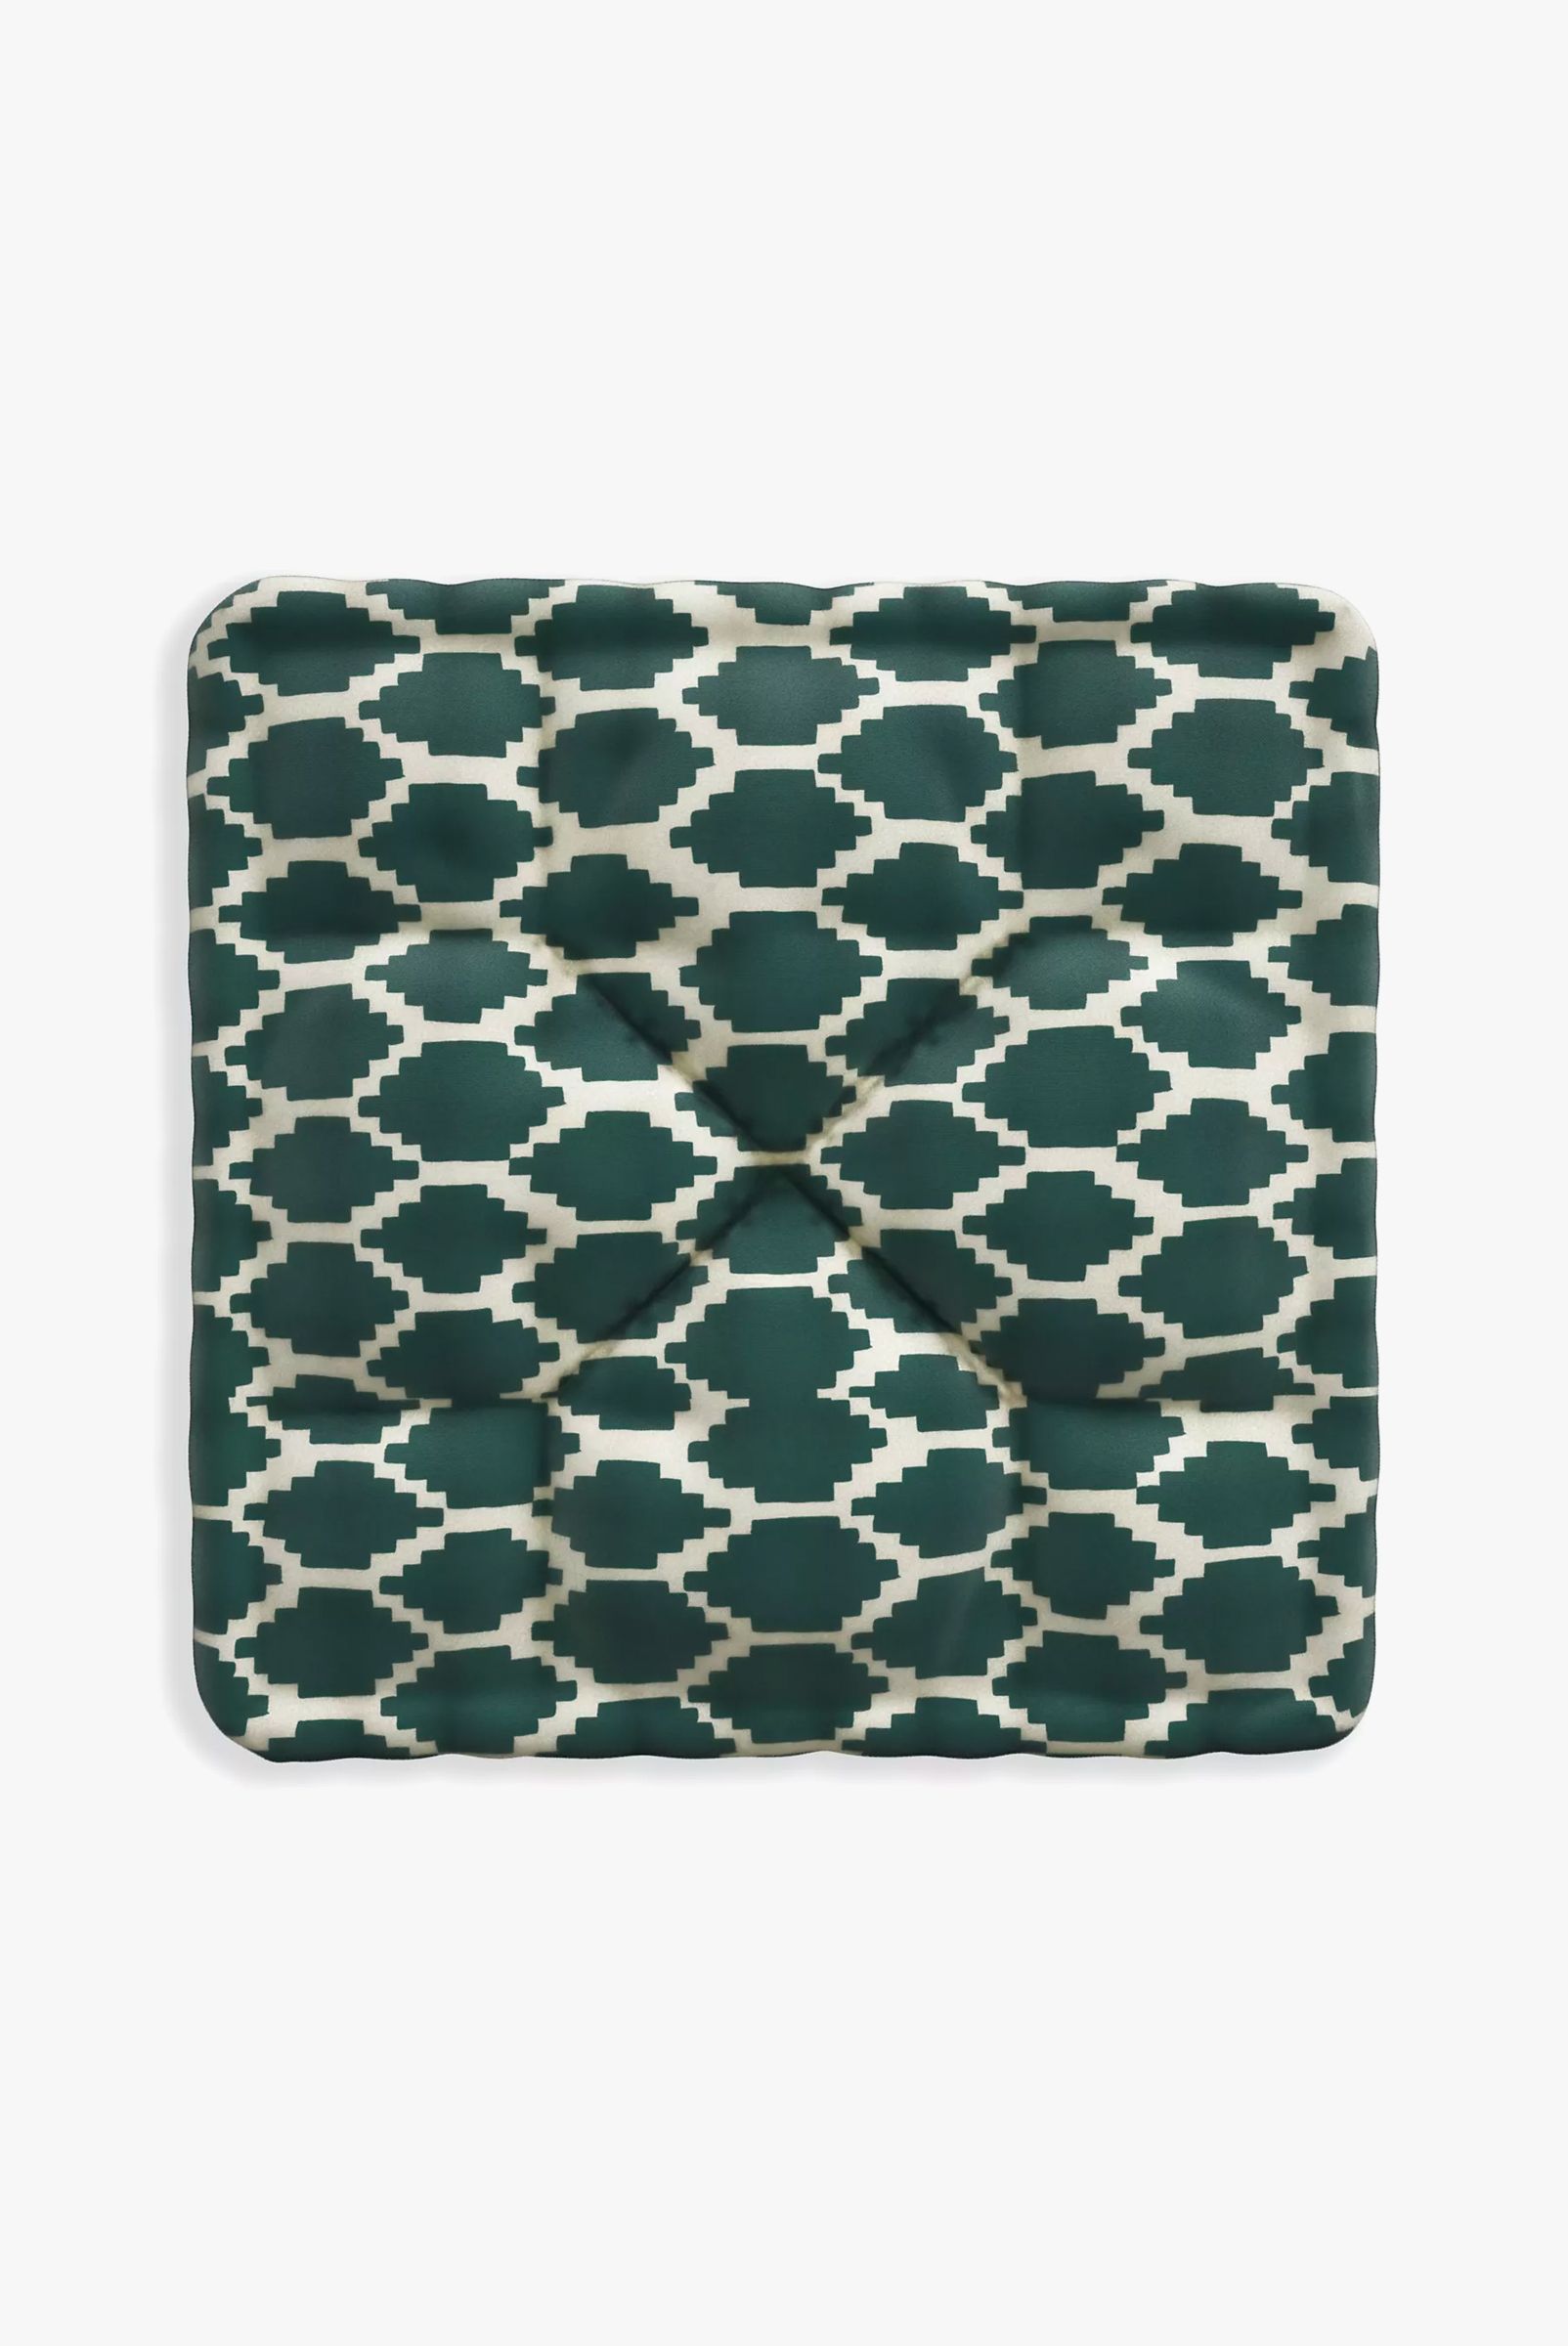 John Lewis & Partners Fusion Diamond Print Garden Floor Cushion, 50 x 50cm, Mallard, £30